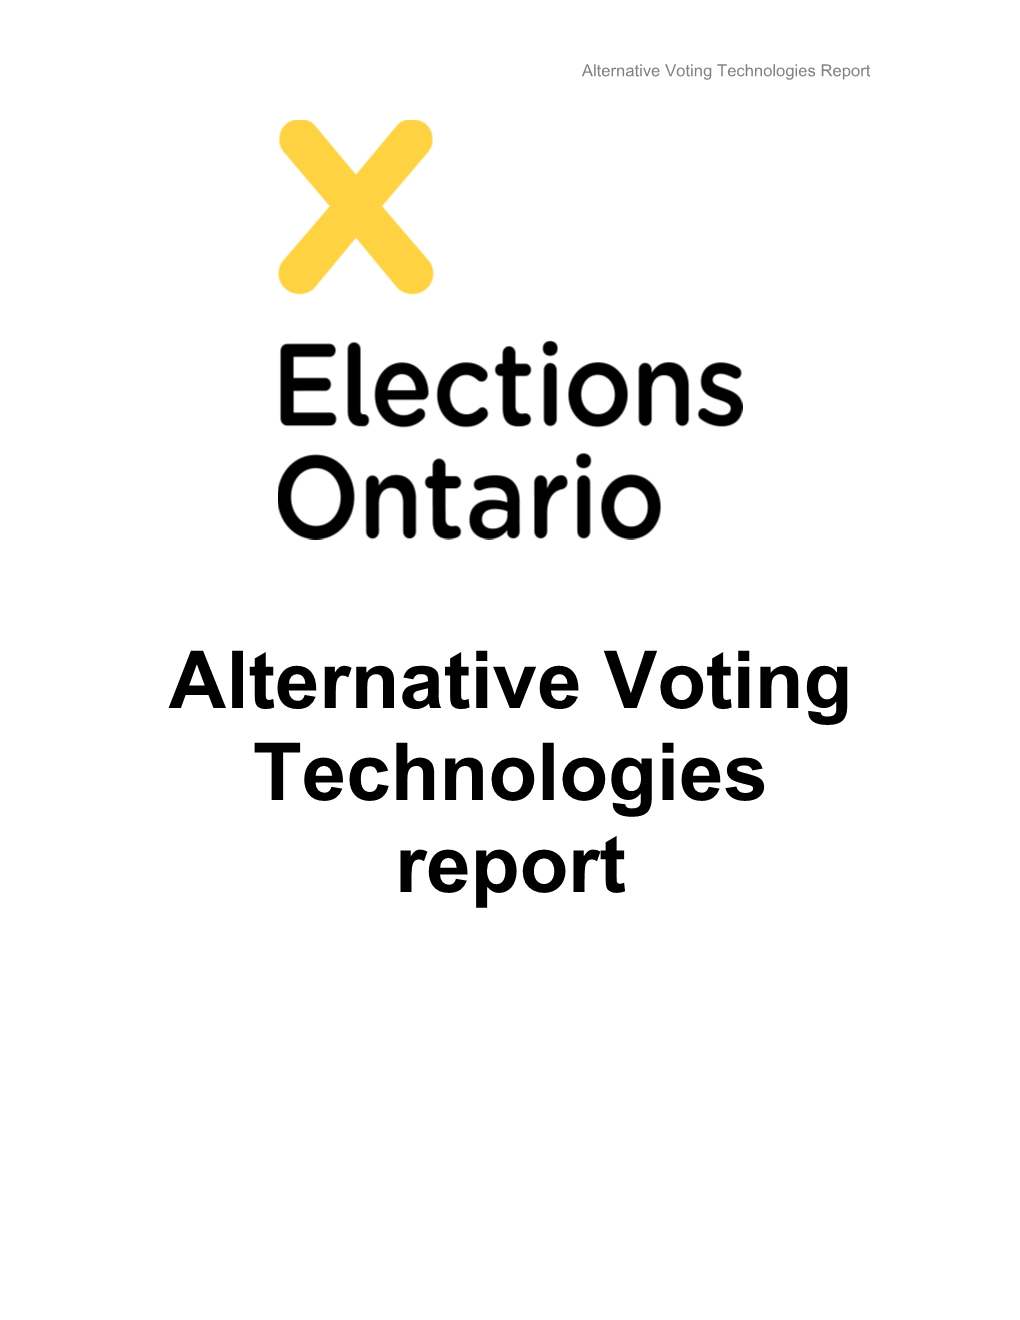 2013-05-06 Final Draft Alternative Voting Report V4